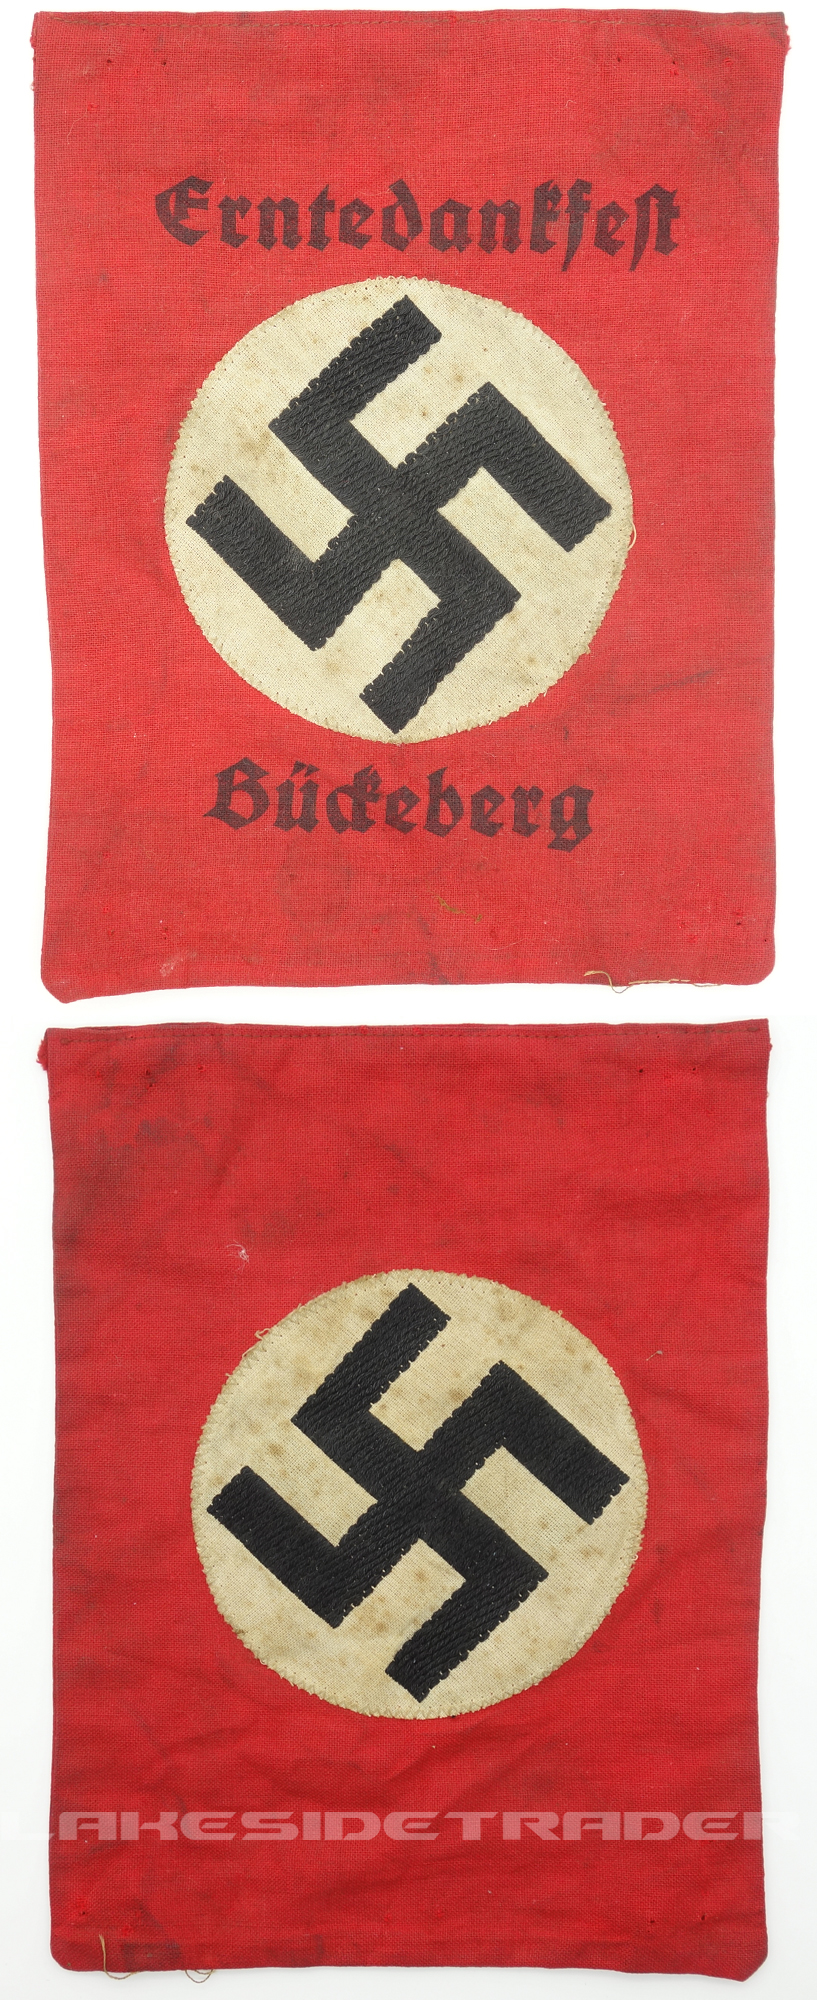 Erntedankfest Bückeburg Table Flag